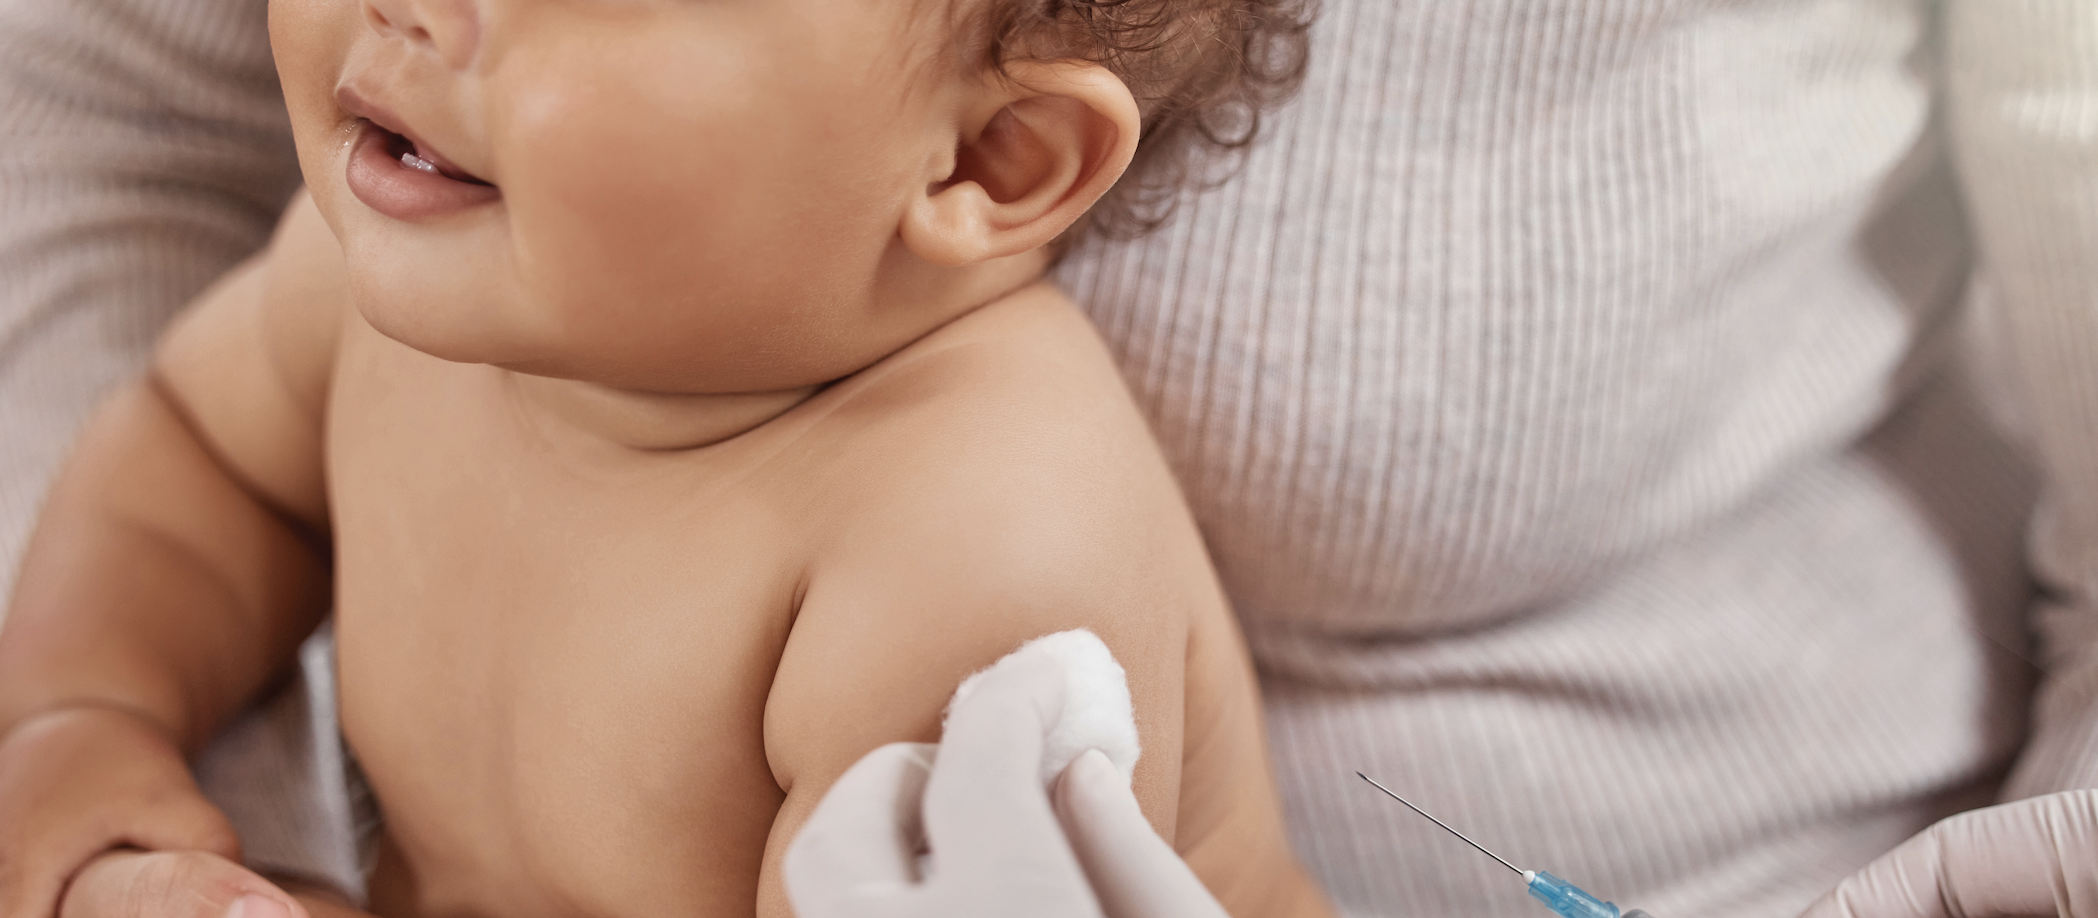 Vaccinating babies